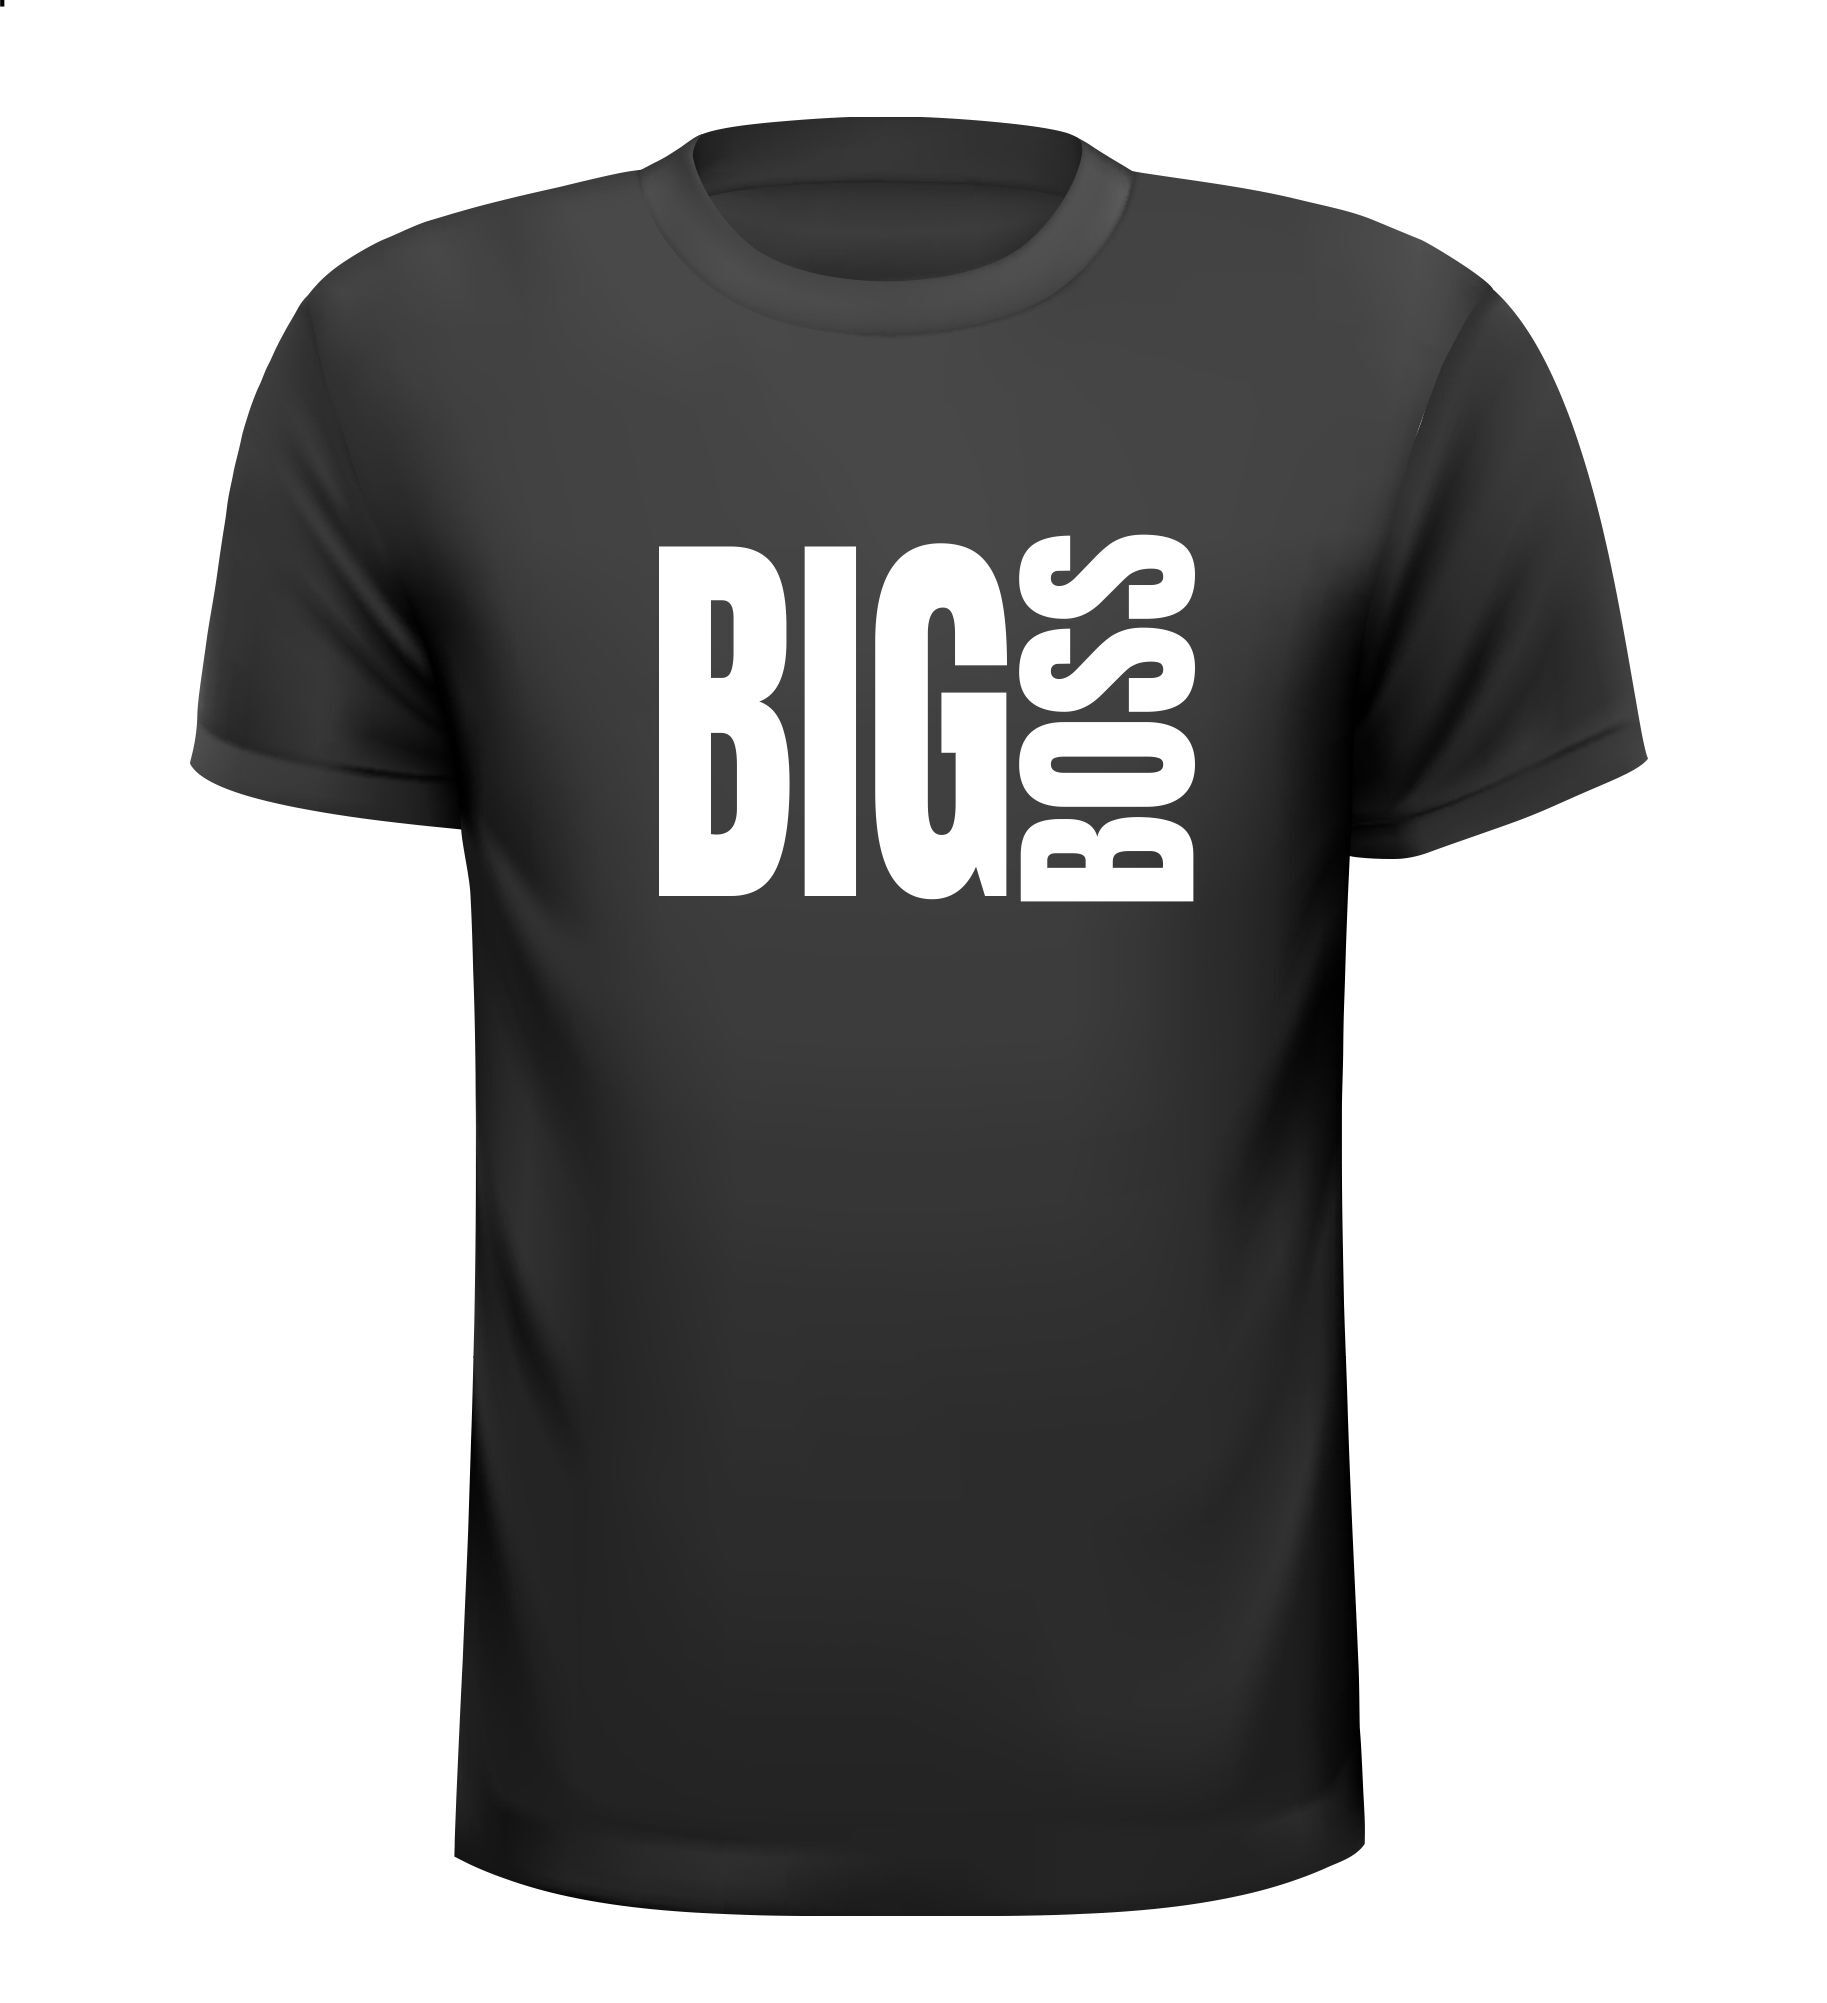 Big boss shirt grote baas shirt